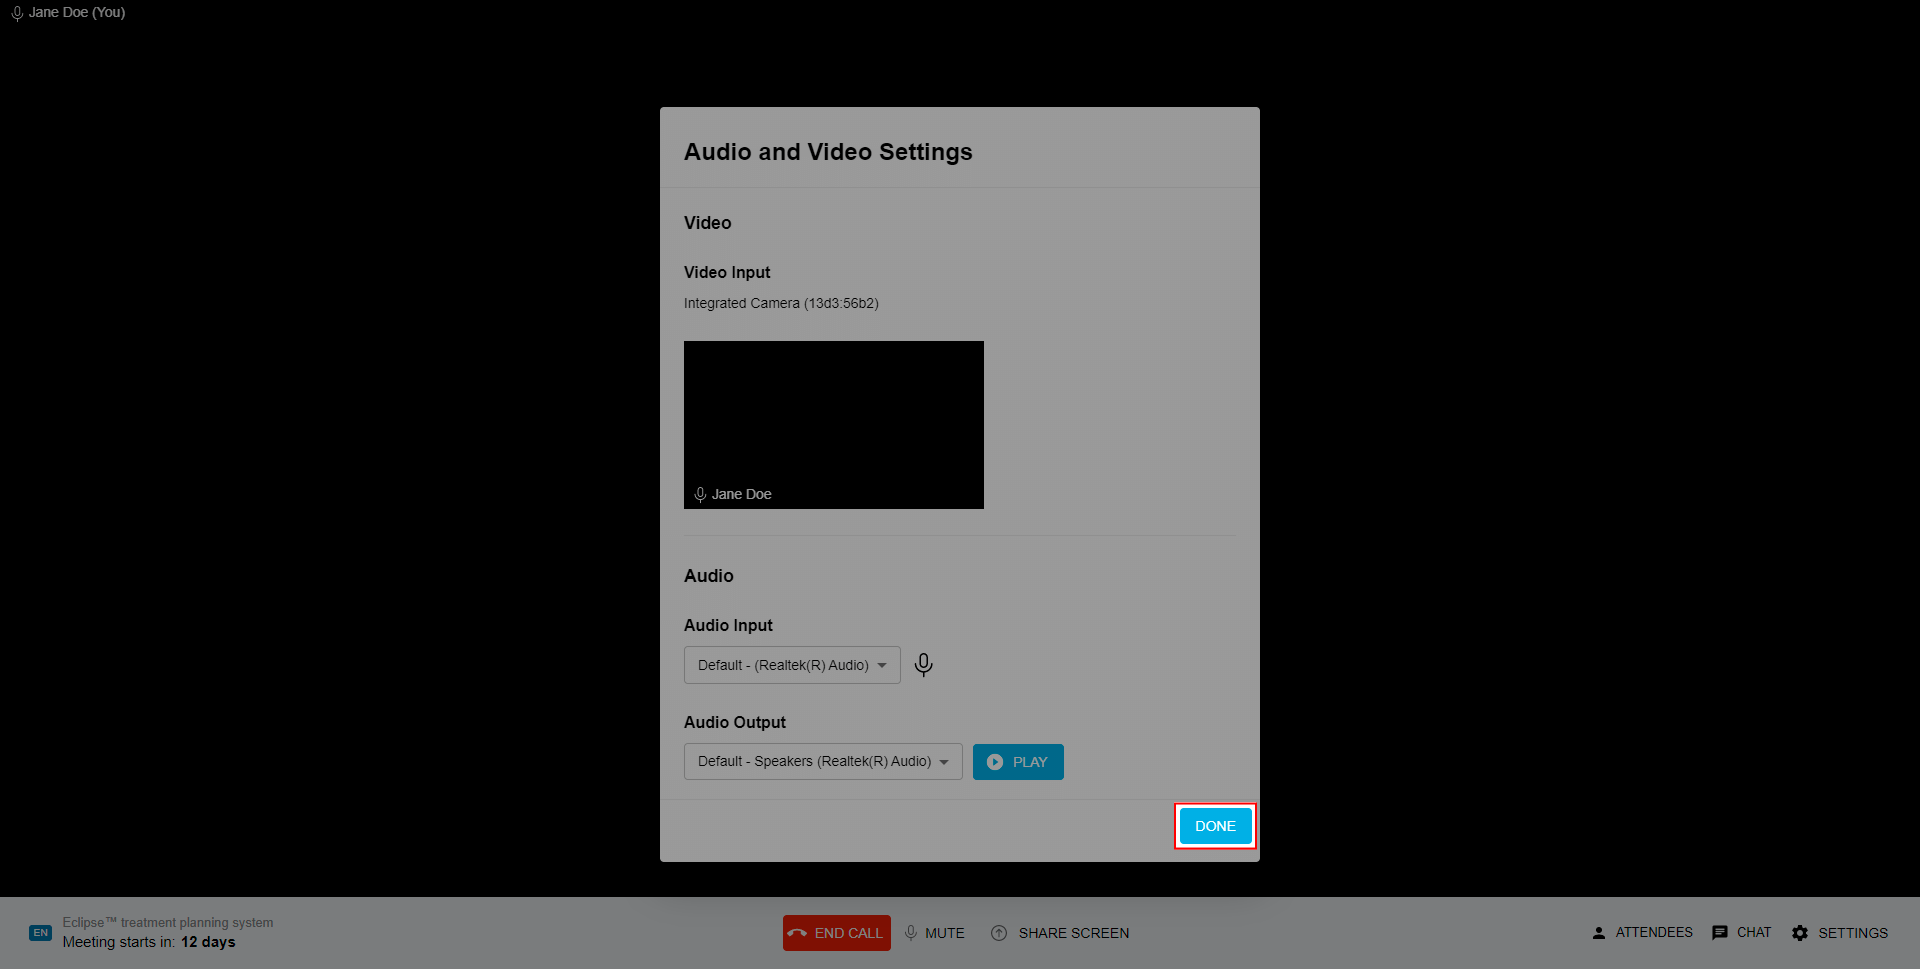 VideoCall - close settings window